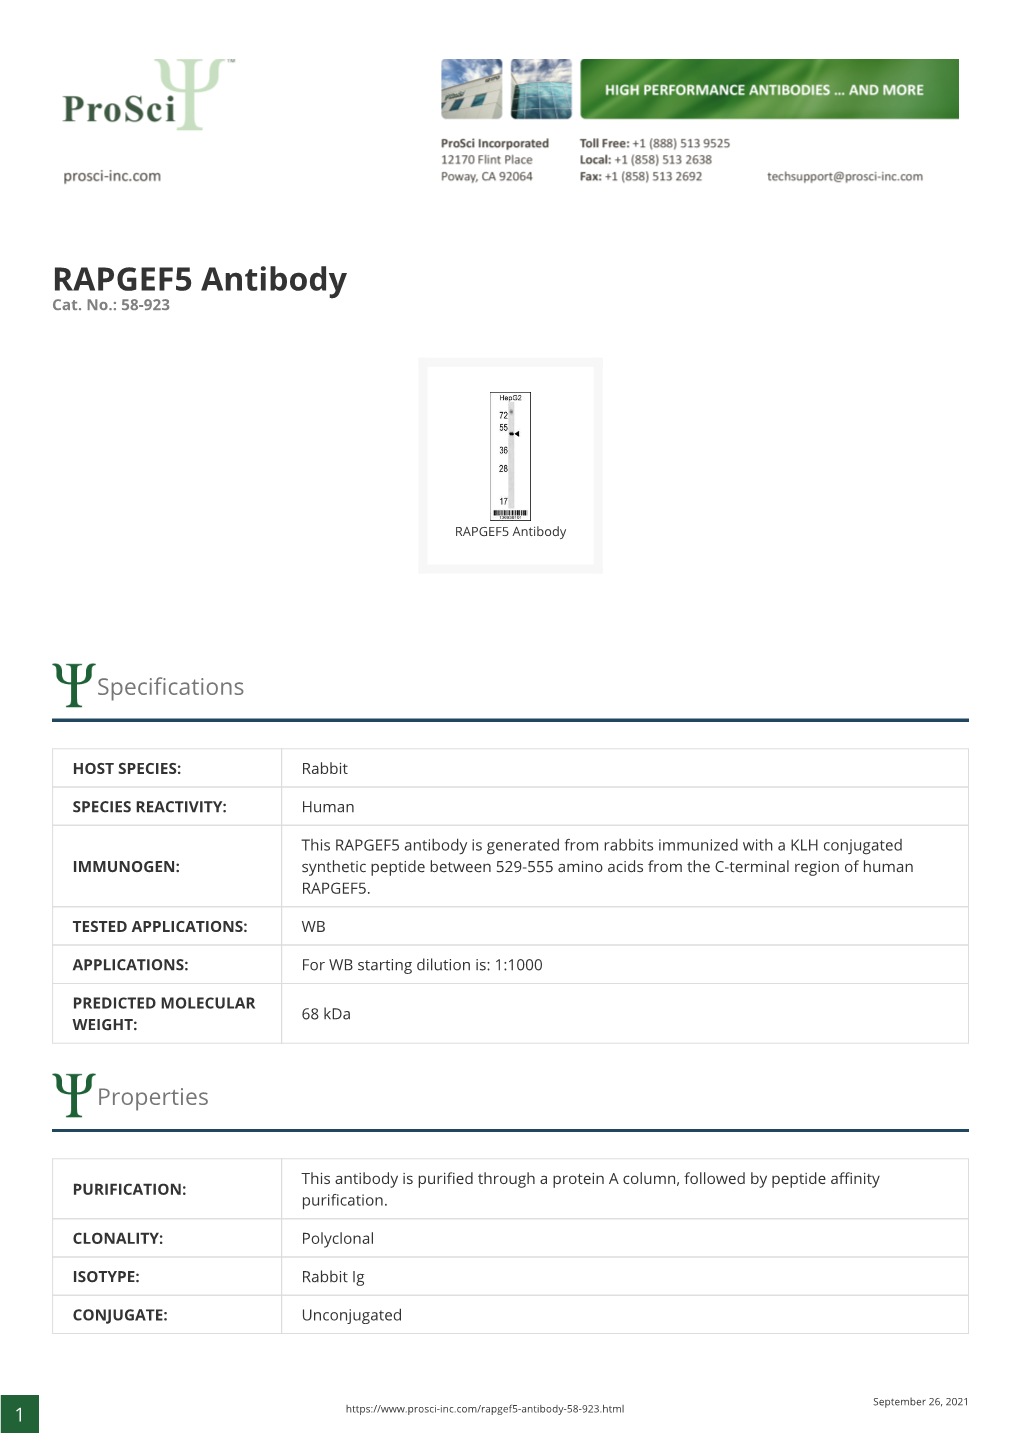 RAPGEF5 Antibody Cat